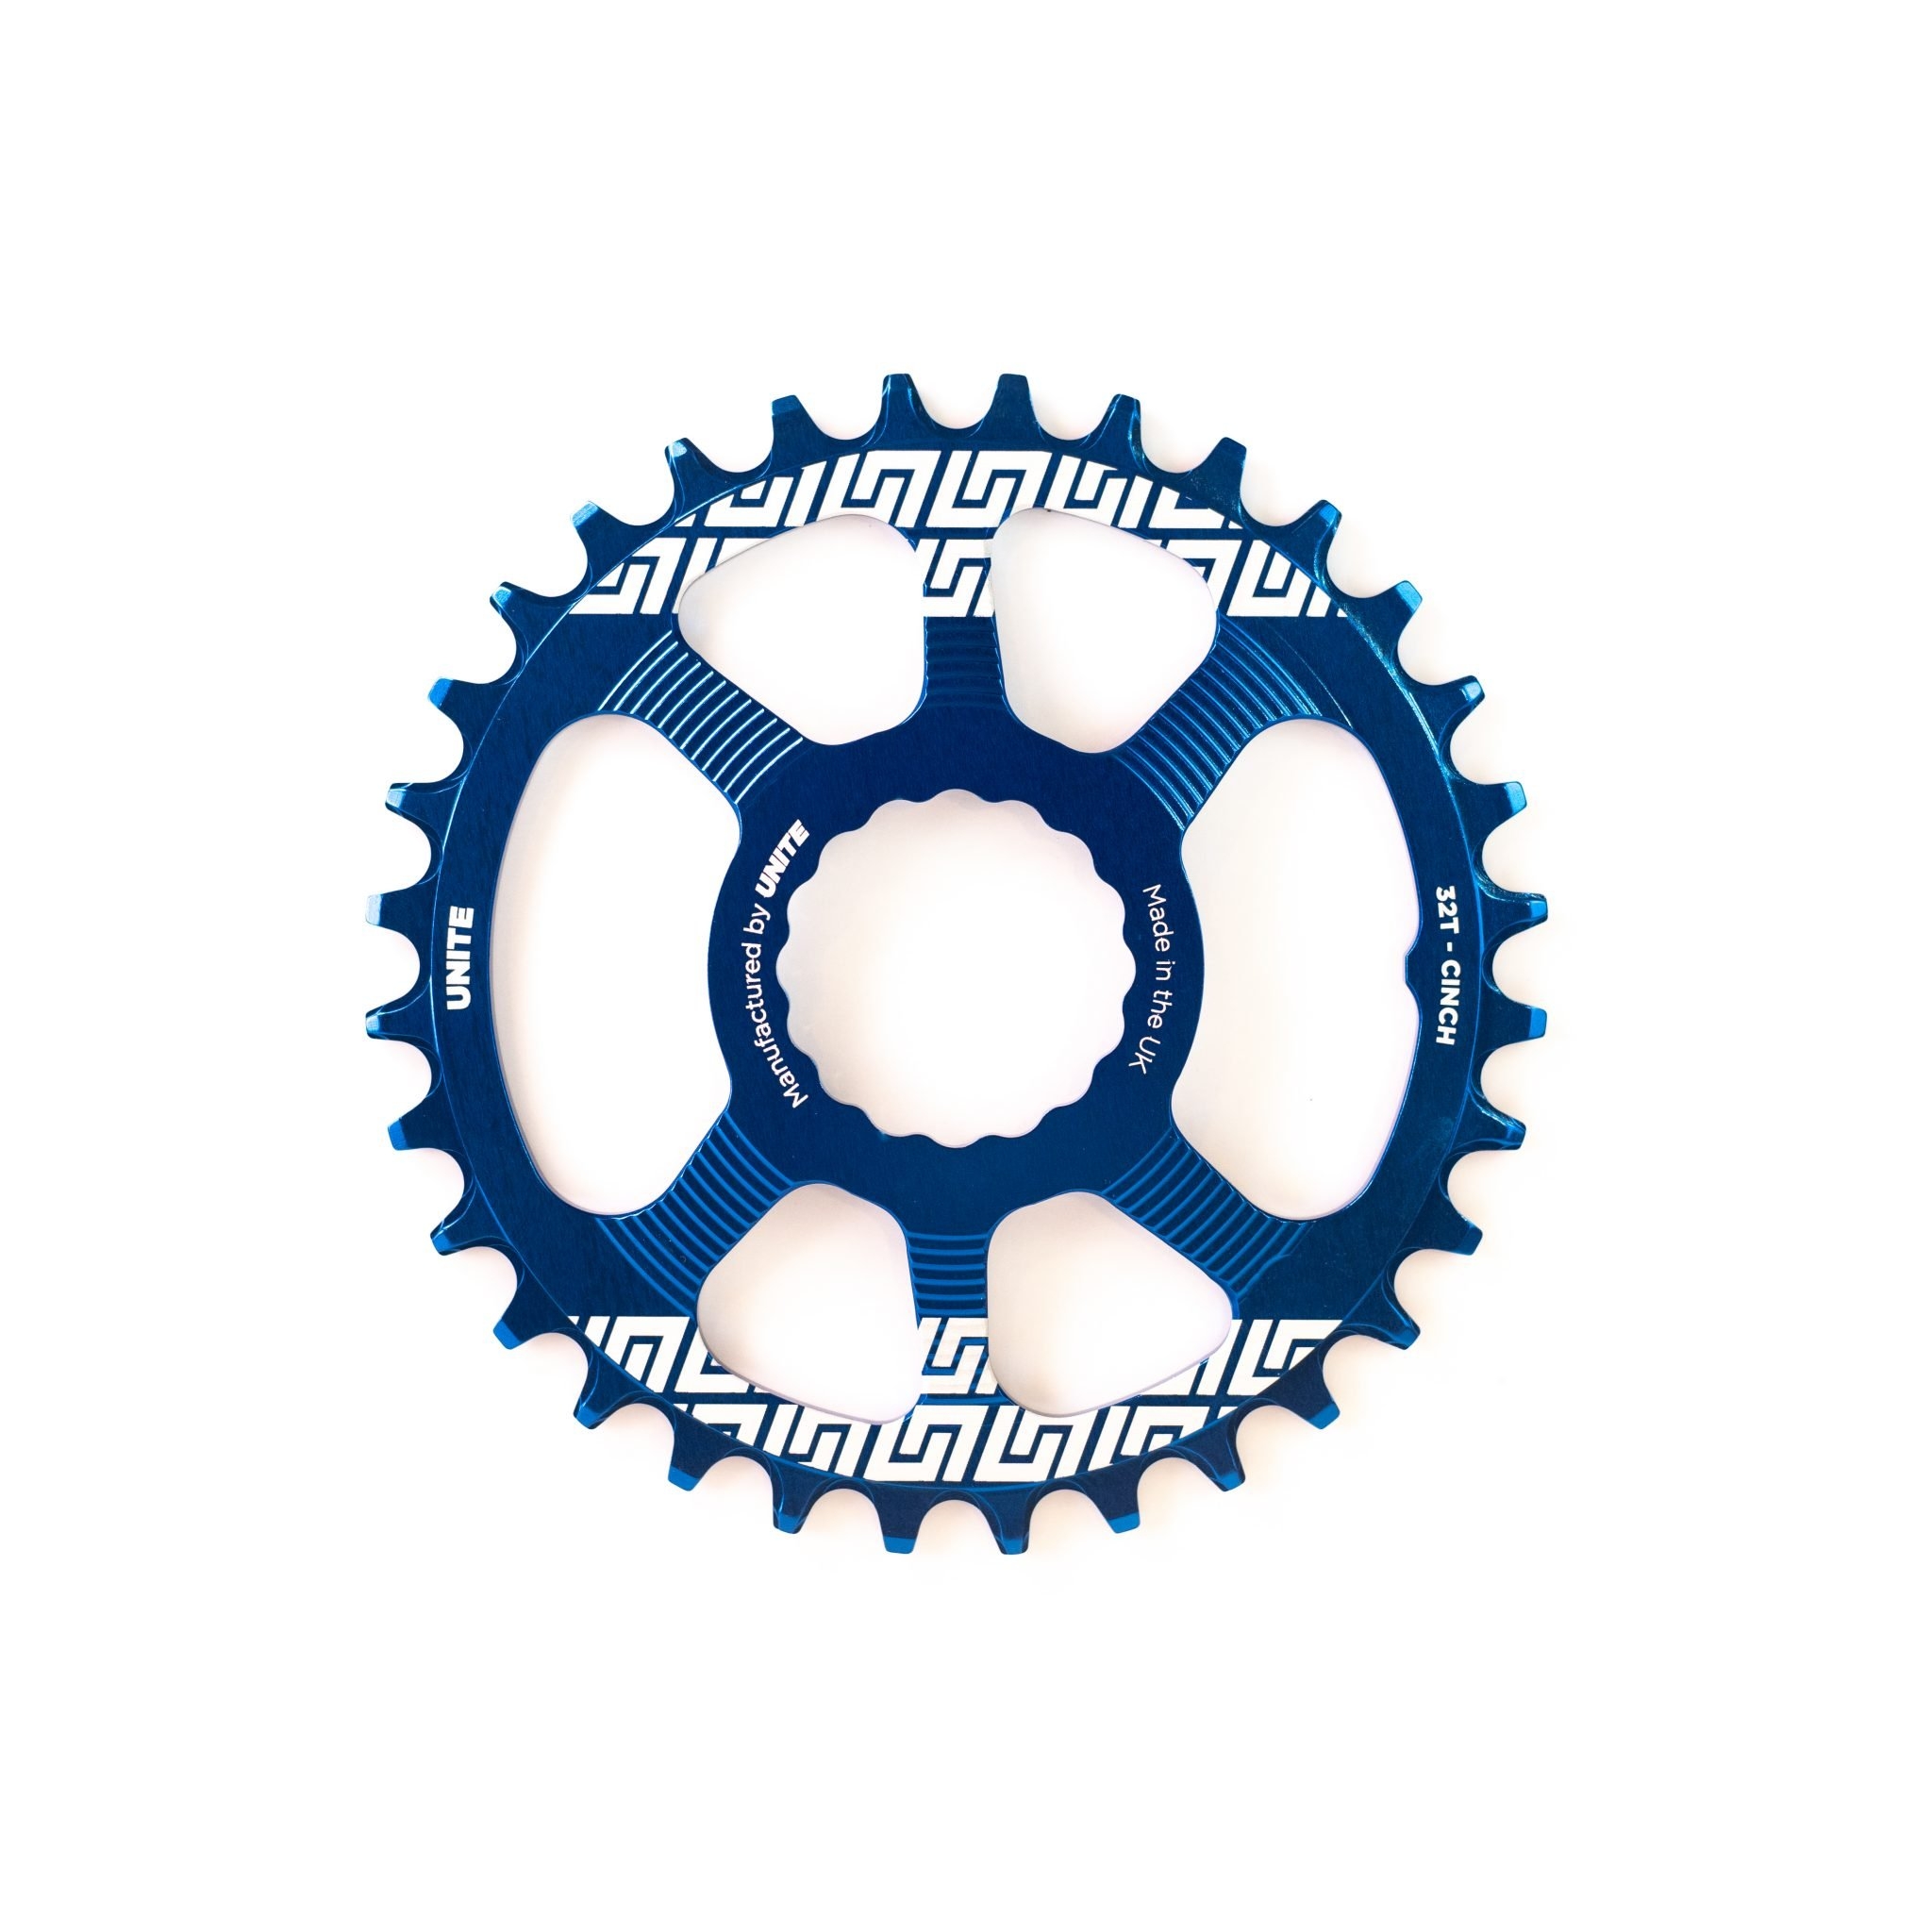 Unite Chain Ring – Raceface Direct Mount Blue 30T